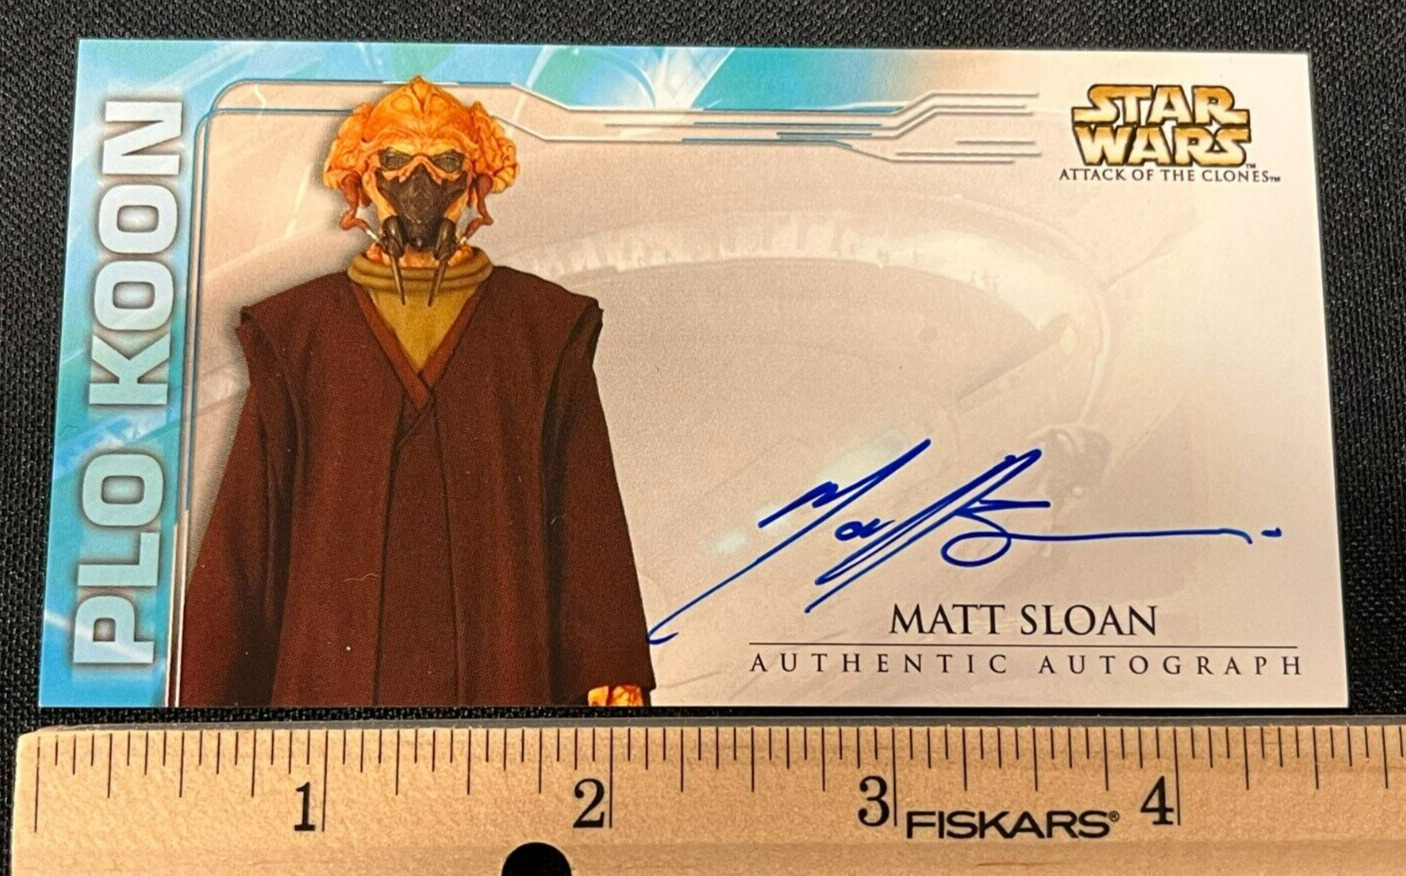 2002 Topps Widevision Star Wars Episode II Plo Koon Matt Sloan Autograph Card AA